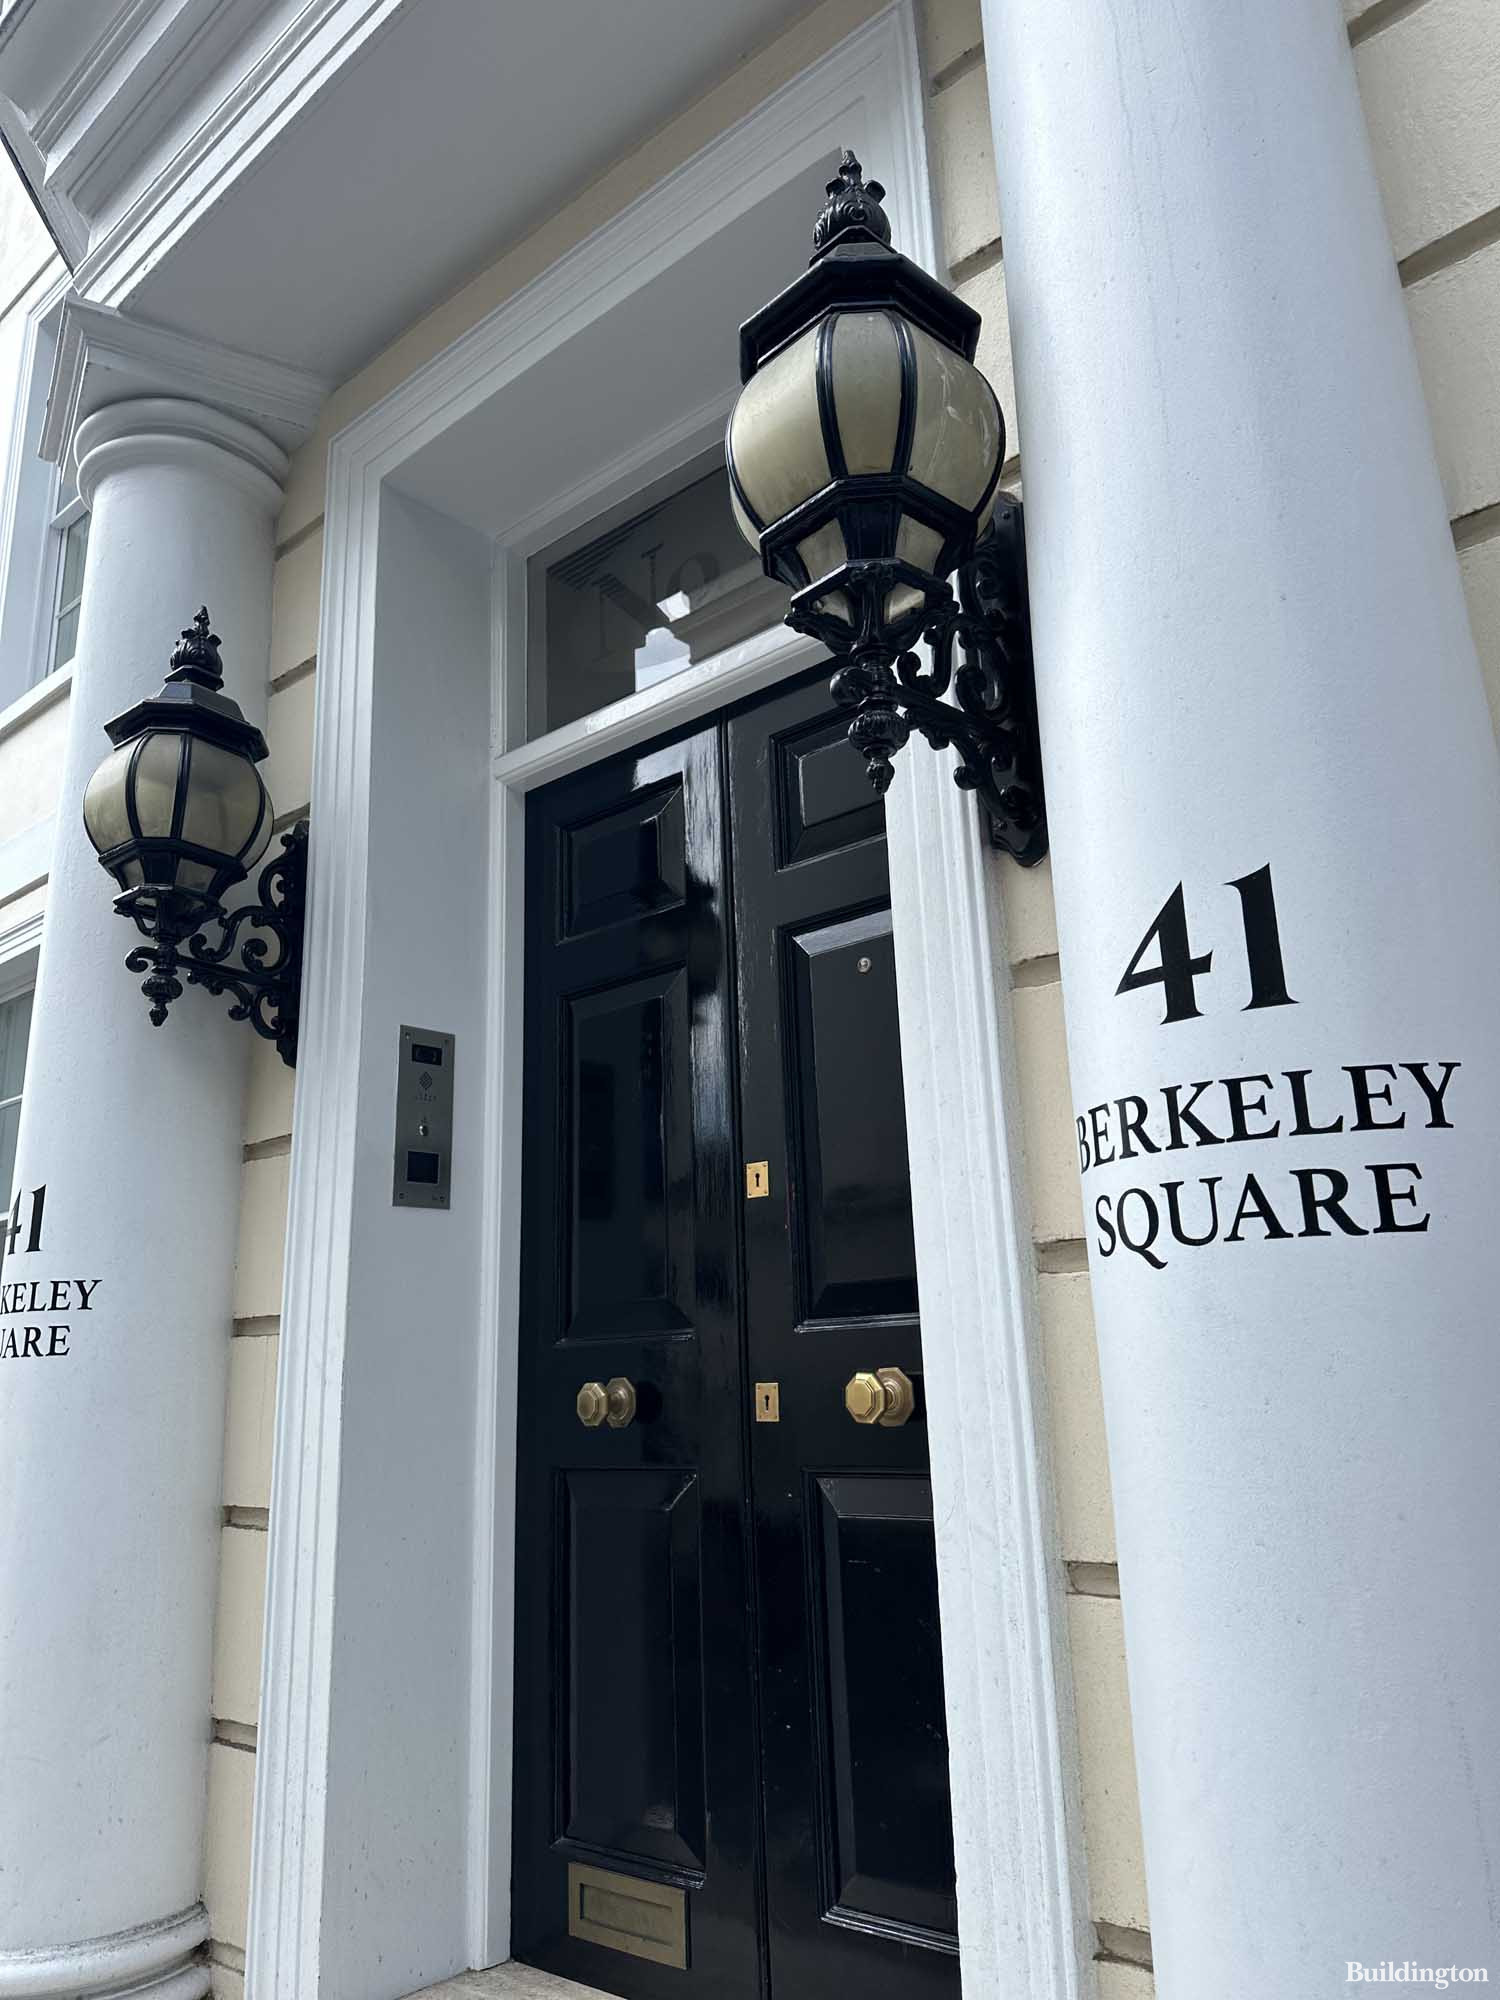 41 Berkeley Square building entrance on Hill Street in Mayfair, London W1.